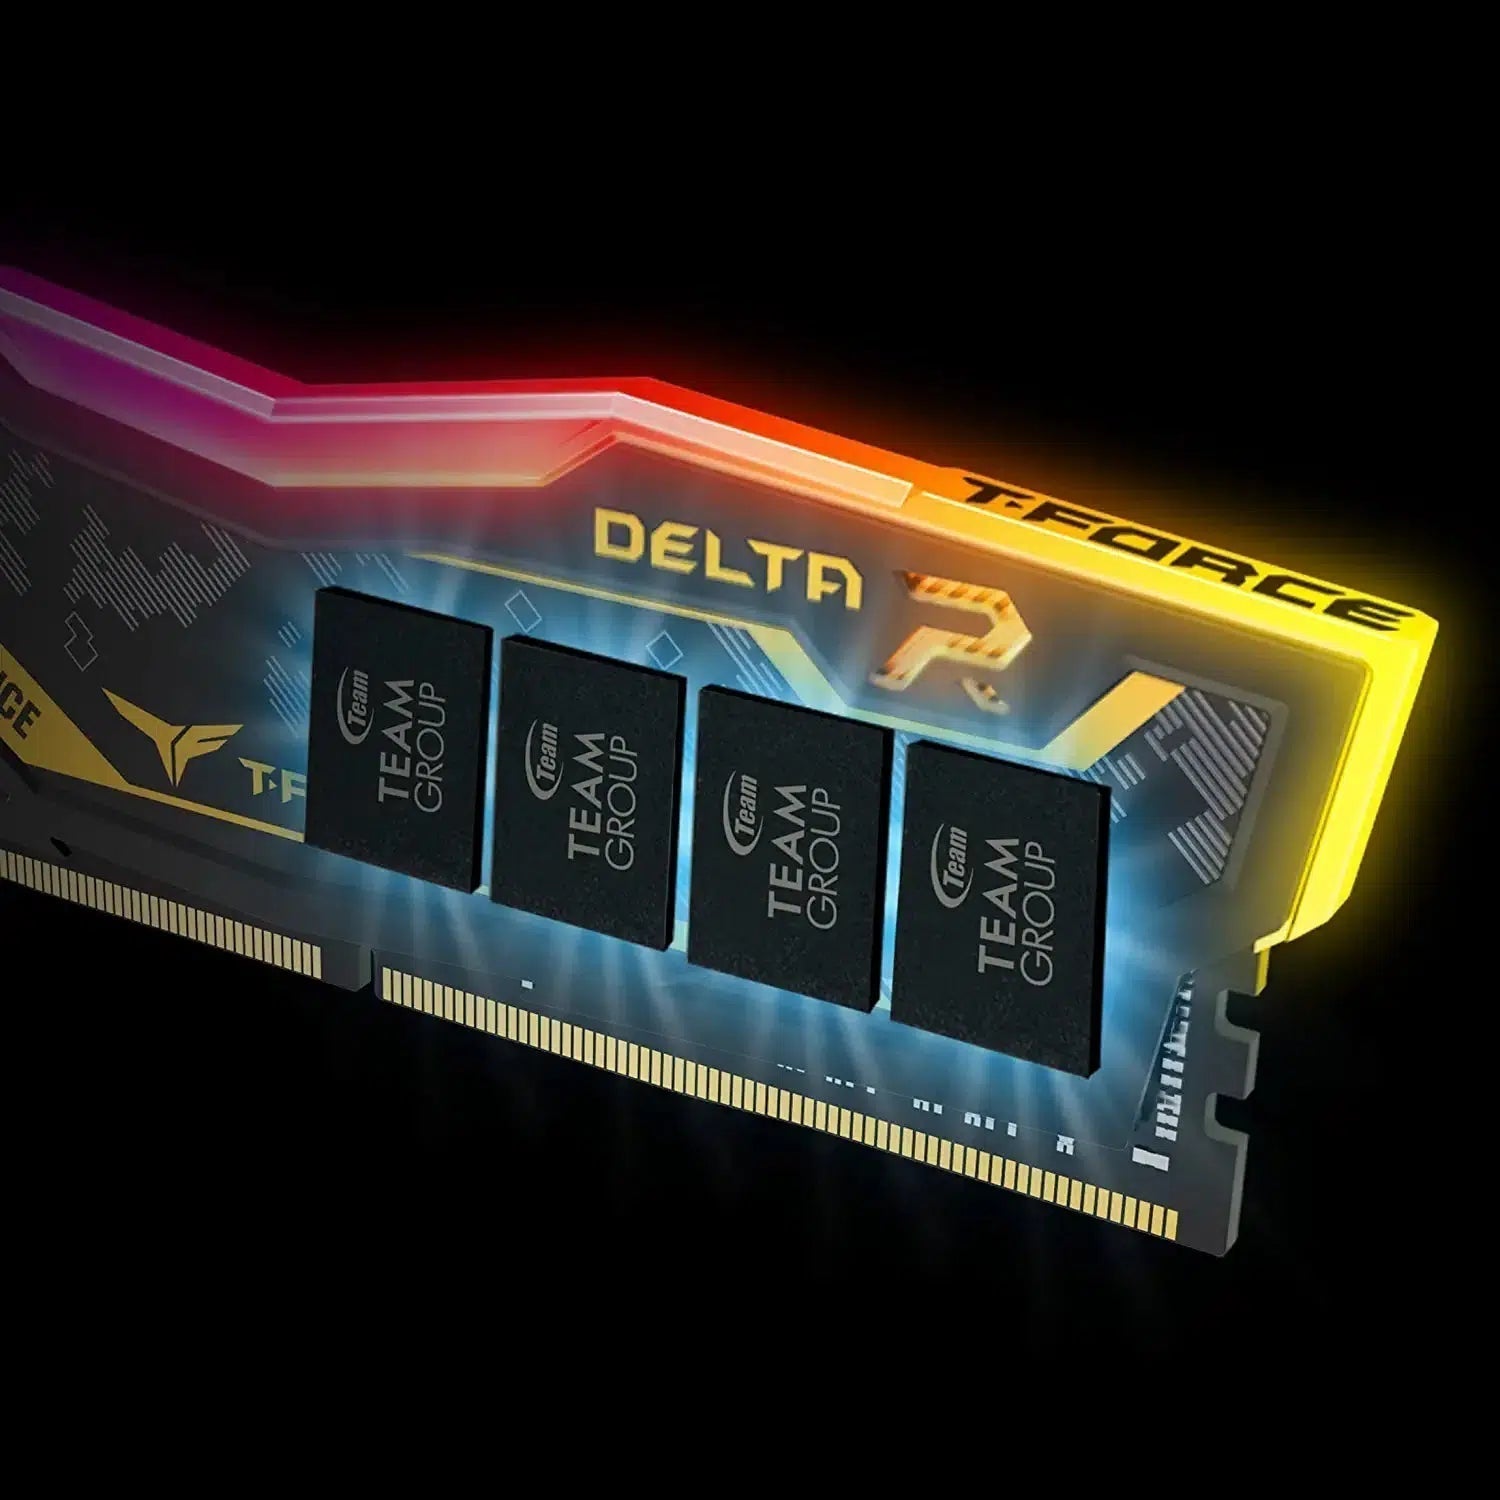 TEAMGROUP T-FORCE DELTA TUF GAMING RGB DDR4 3200 CL16 16GB(2x8GB) MEMORY-MEMORY-Makotek Computers